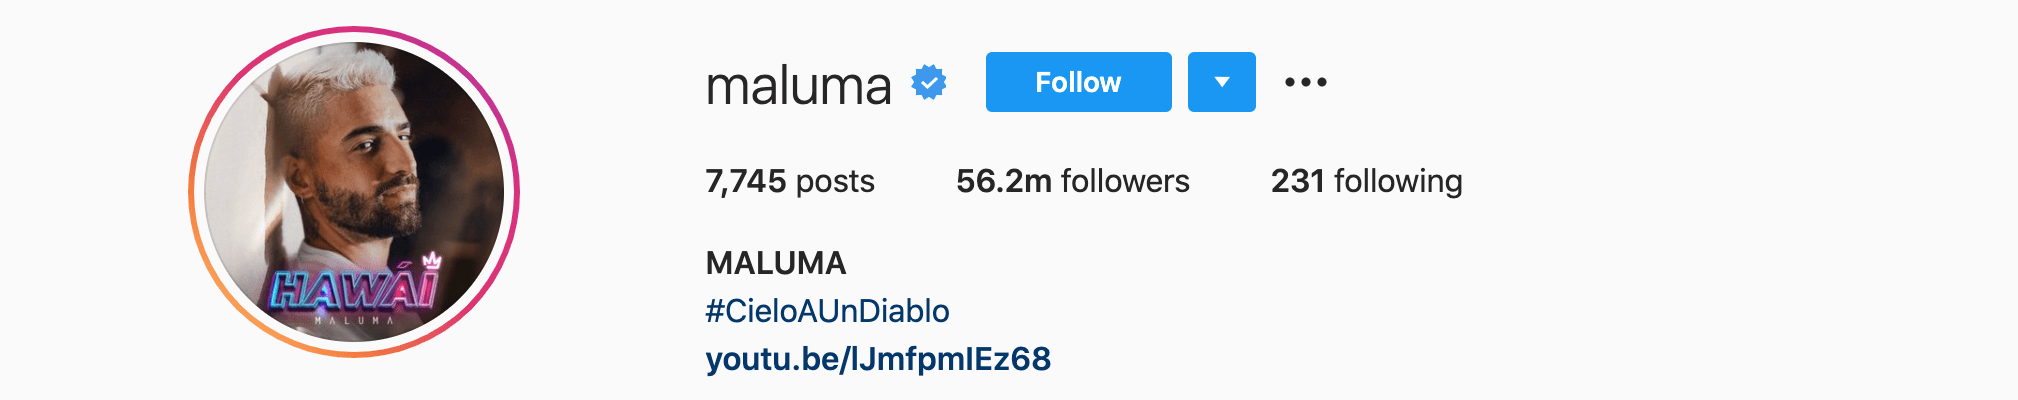 Top Instagram Influencers - MALUMA